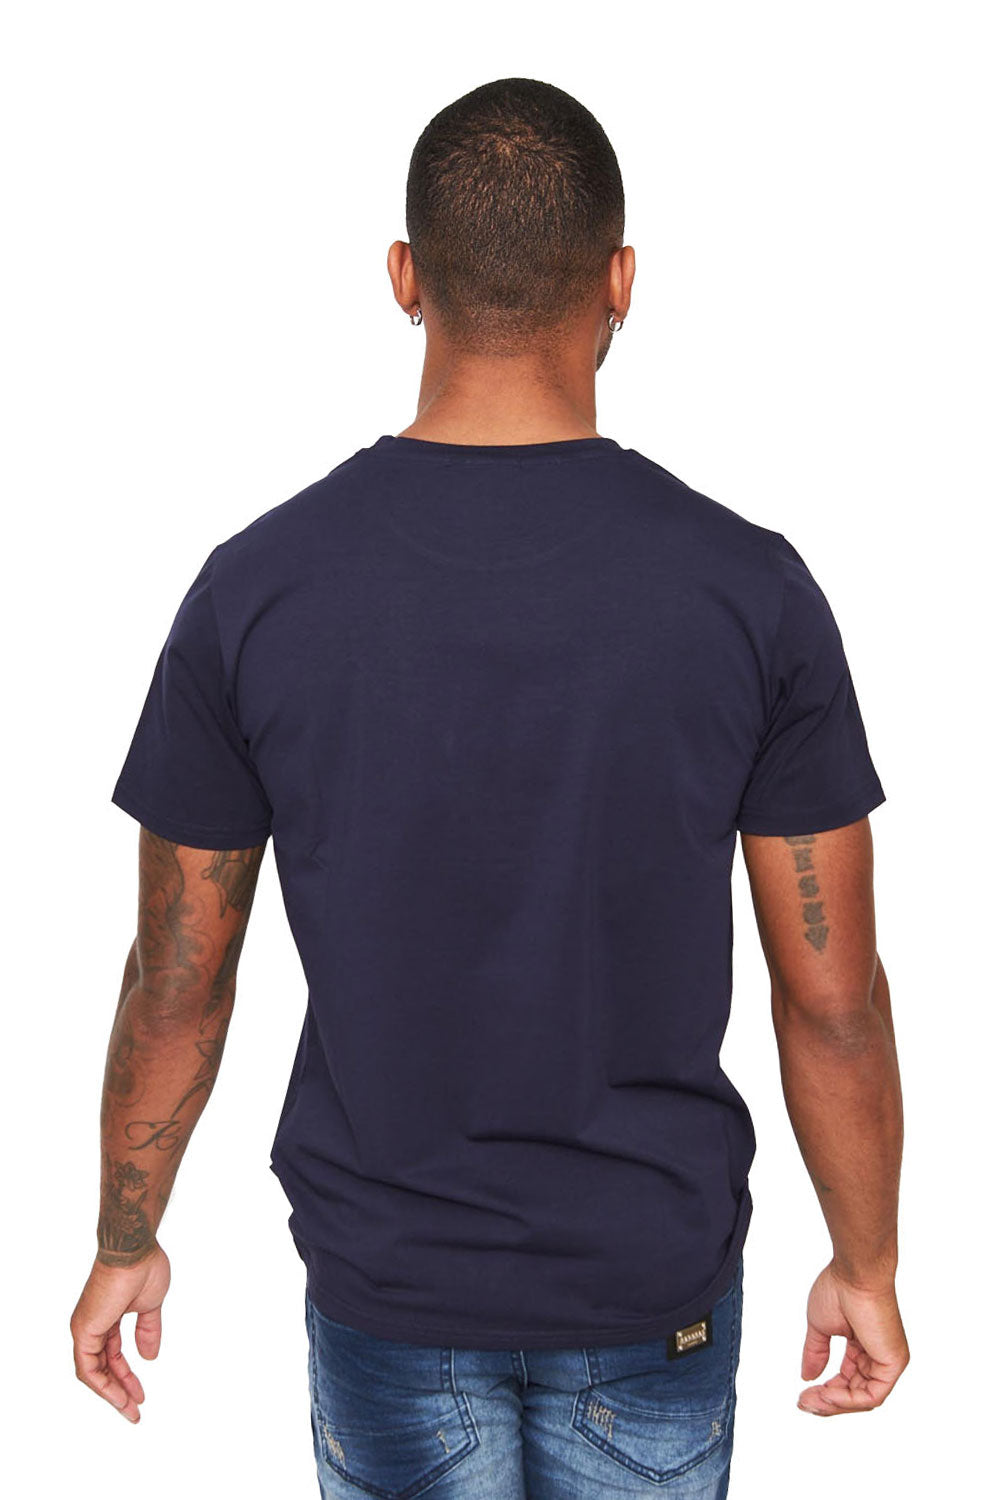 BARABAS Men's Basic Solid Color Crew-neck T-shirts ST933 navy